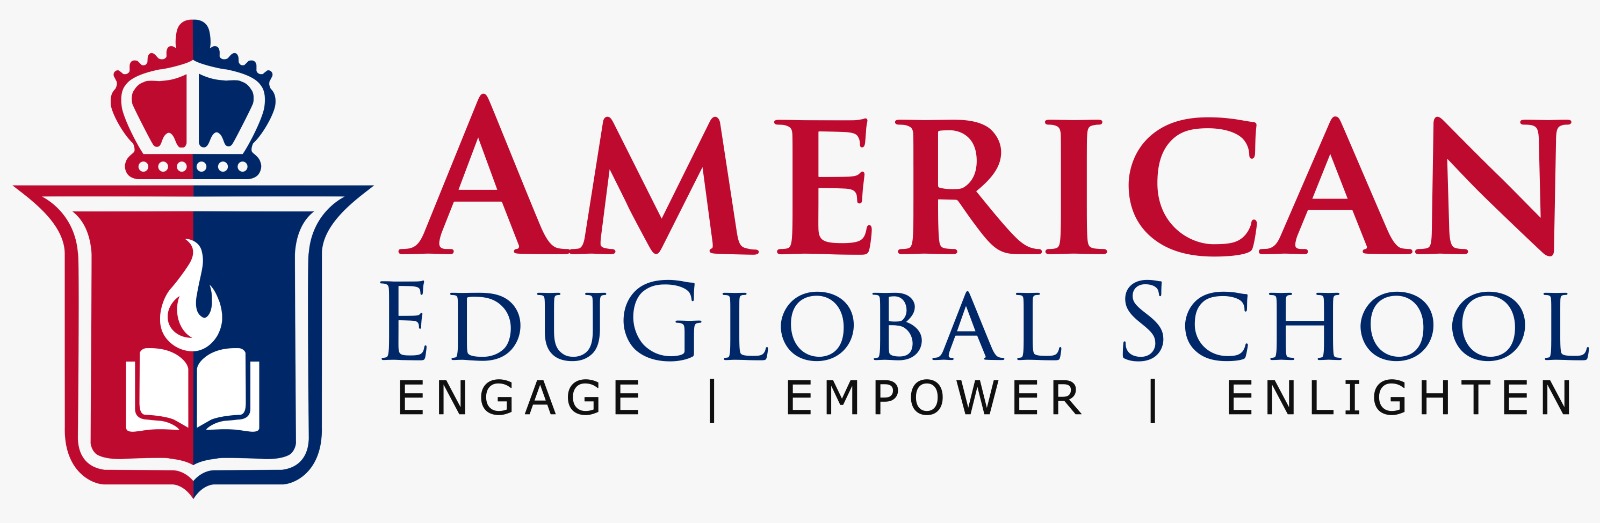 american eduglobal school logo